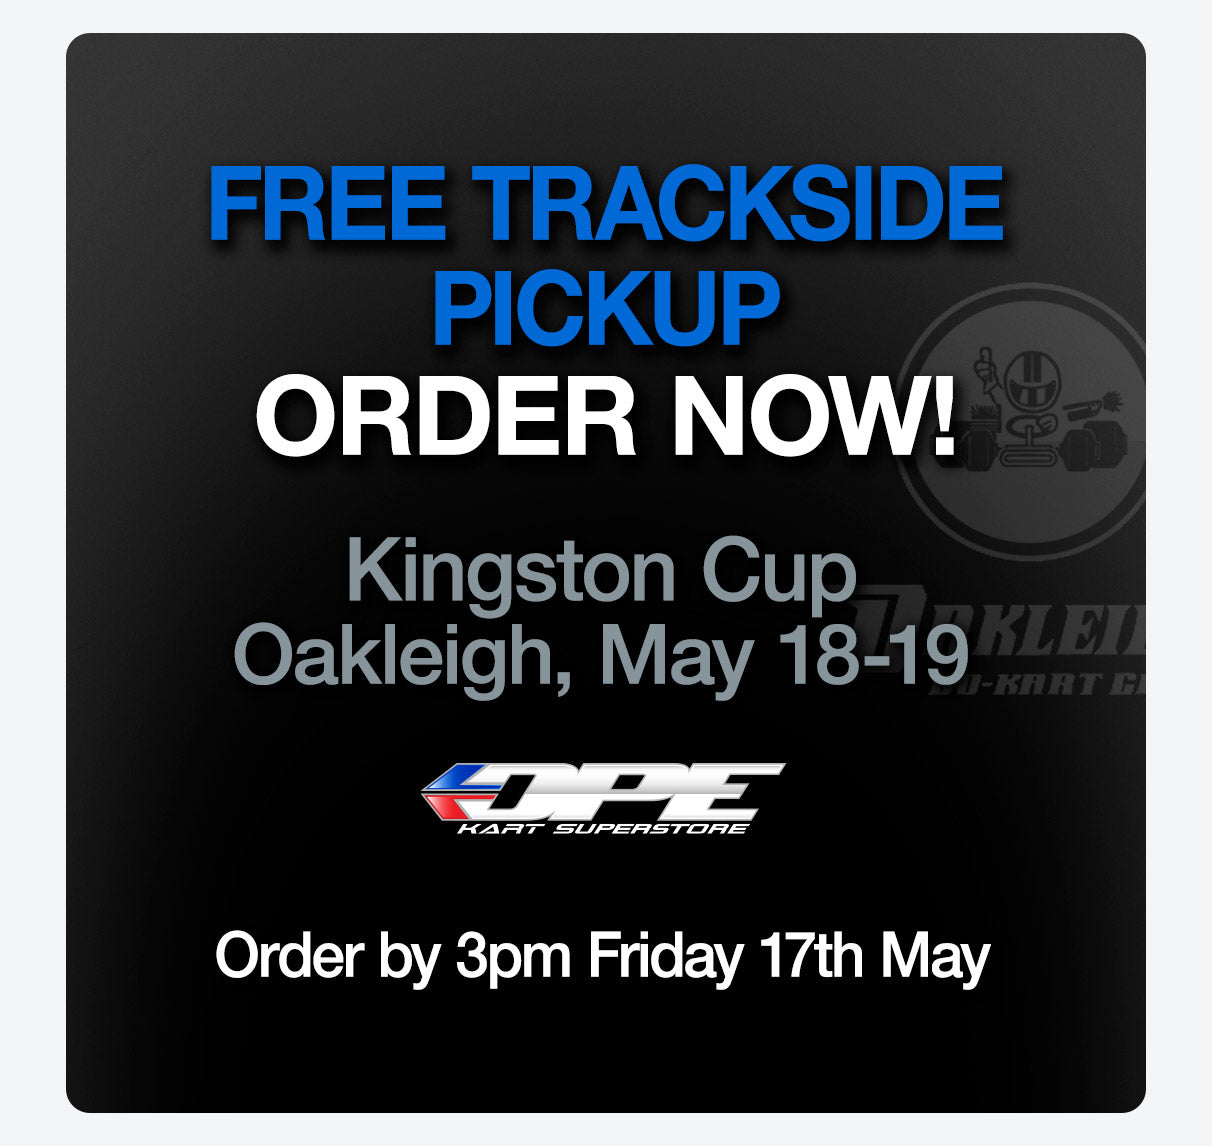 Online Order Free Trackside Pickup at Kingston Cup